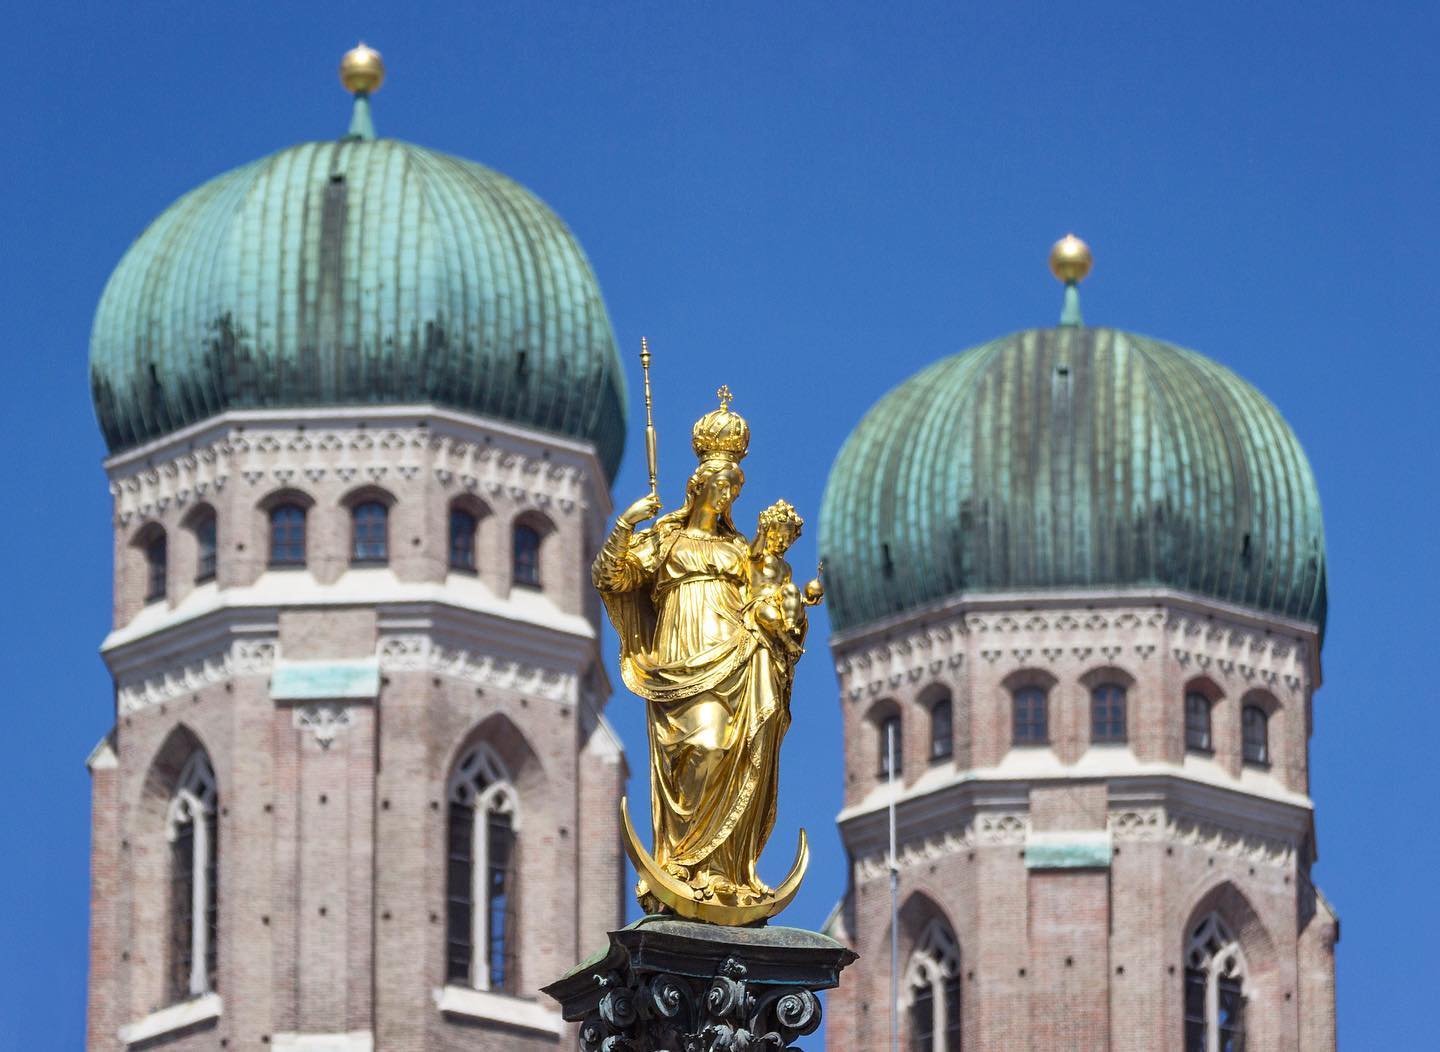 Munich's most captured picture...
I love this view 😍
.
.
.
#frauenkirche #domzuunsererliebenfrau #domzuunserenliebenfrau #frauenkirchemünchen #deinbayern #bavaria #955charivari #munich #münchen #munichblogger #prettygermany_  #drone #dronephotography #munichnotes #architecture #architecturephotography #droneshot #incredible_europe #dji #djimavicmini #instagood #topmunichphoto #germanysworld #minga #visitbayern #bavariagermany #munichcity #welovemunich #drohne #munichworld